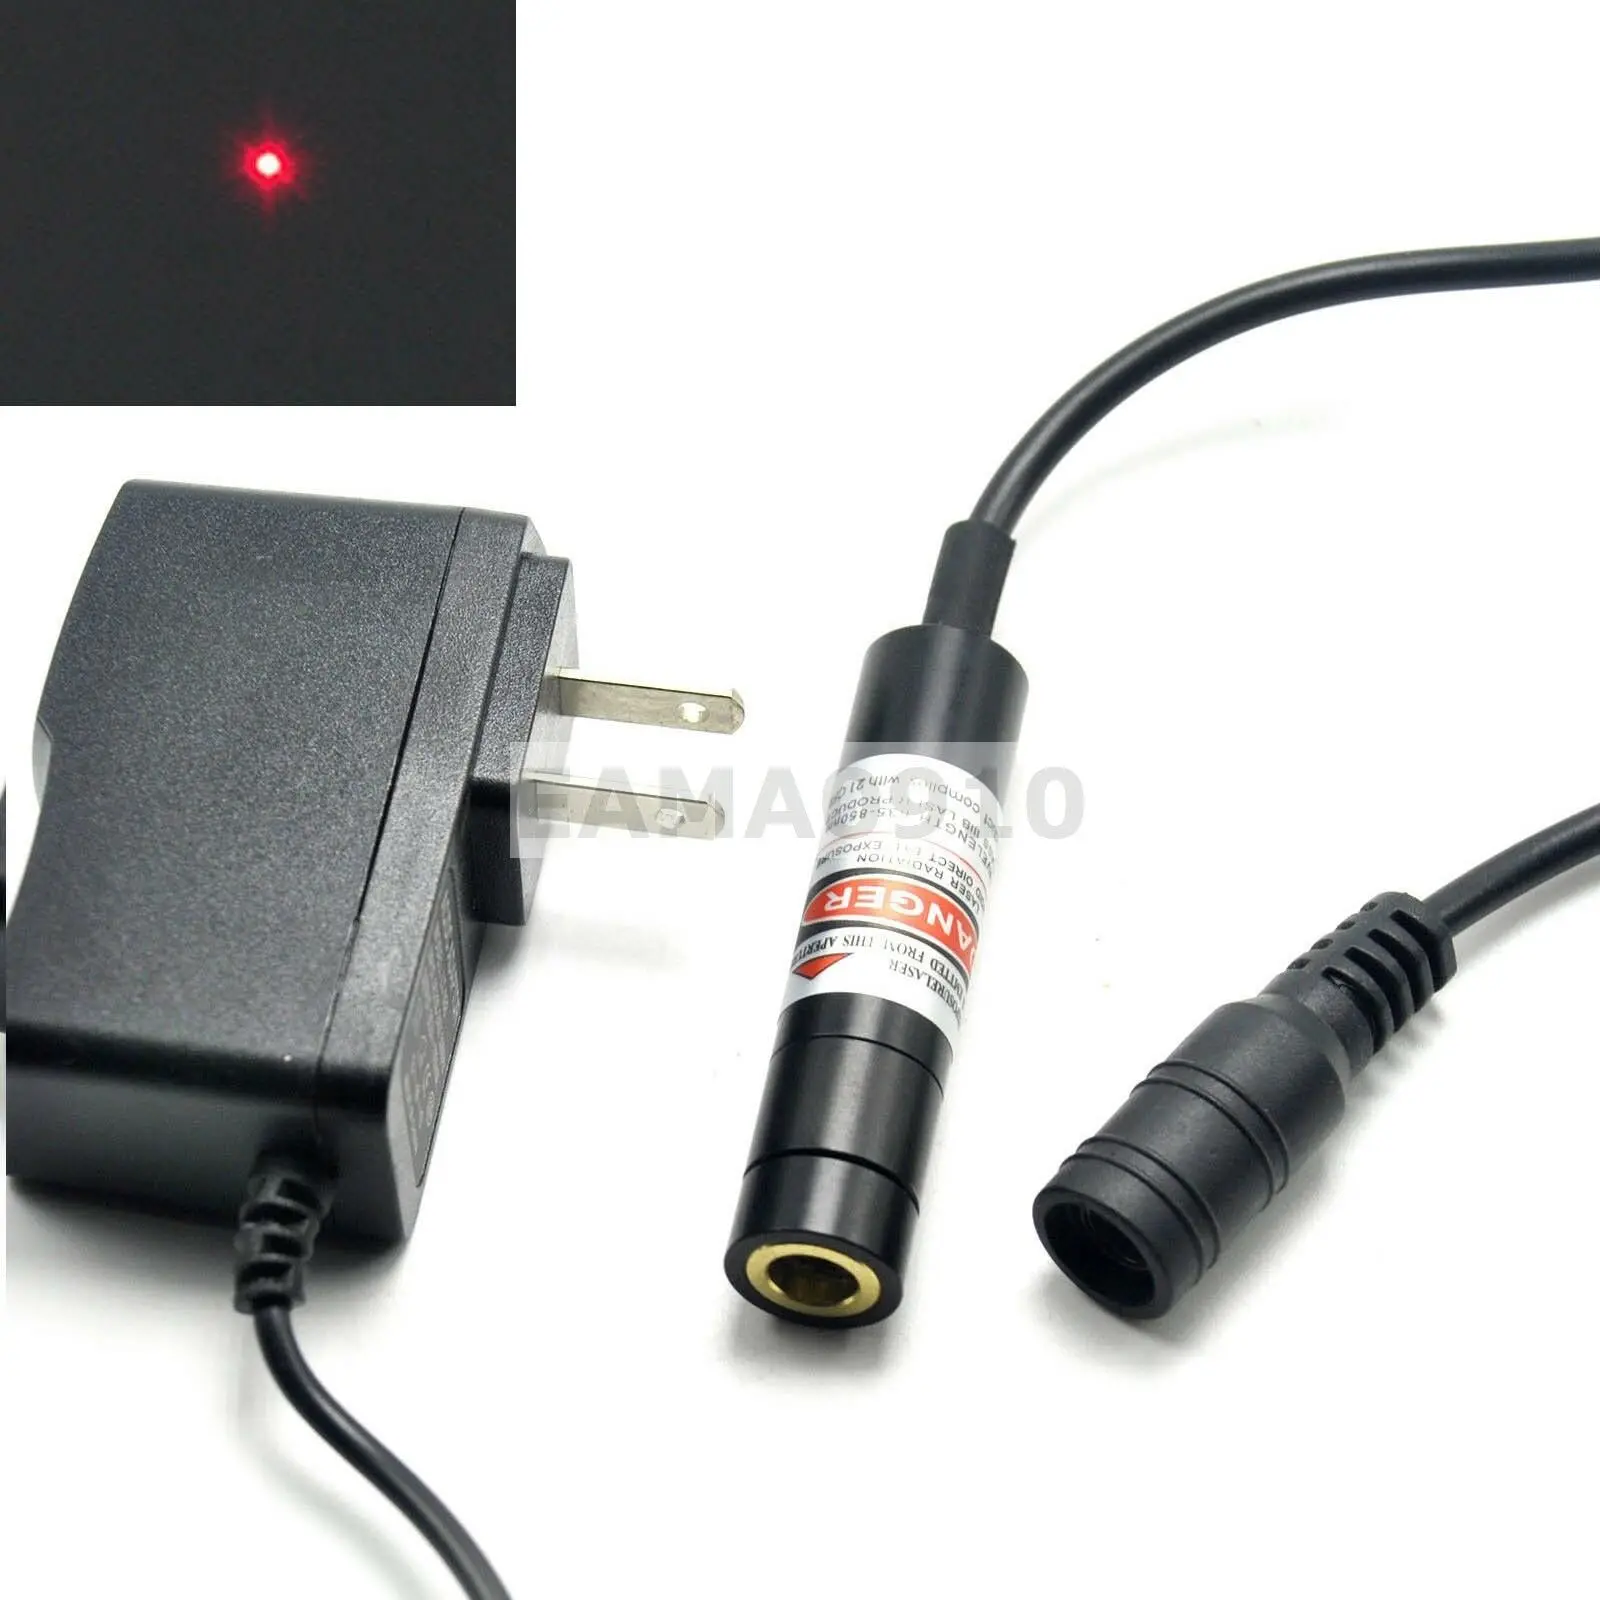 Luz láser enfocable de 20mW, punto rojo, Módulo de diodo láser, 650nm, 12x55mm con adaptador